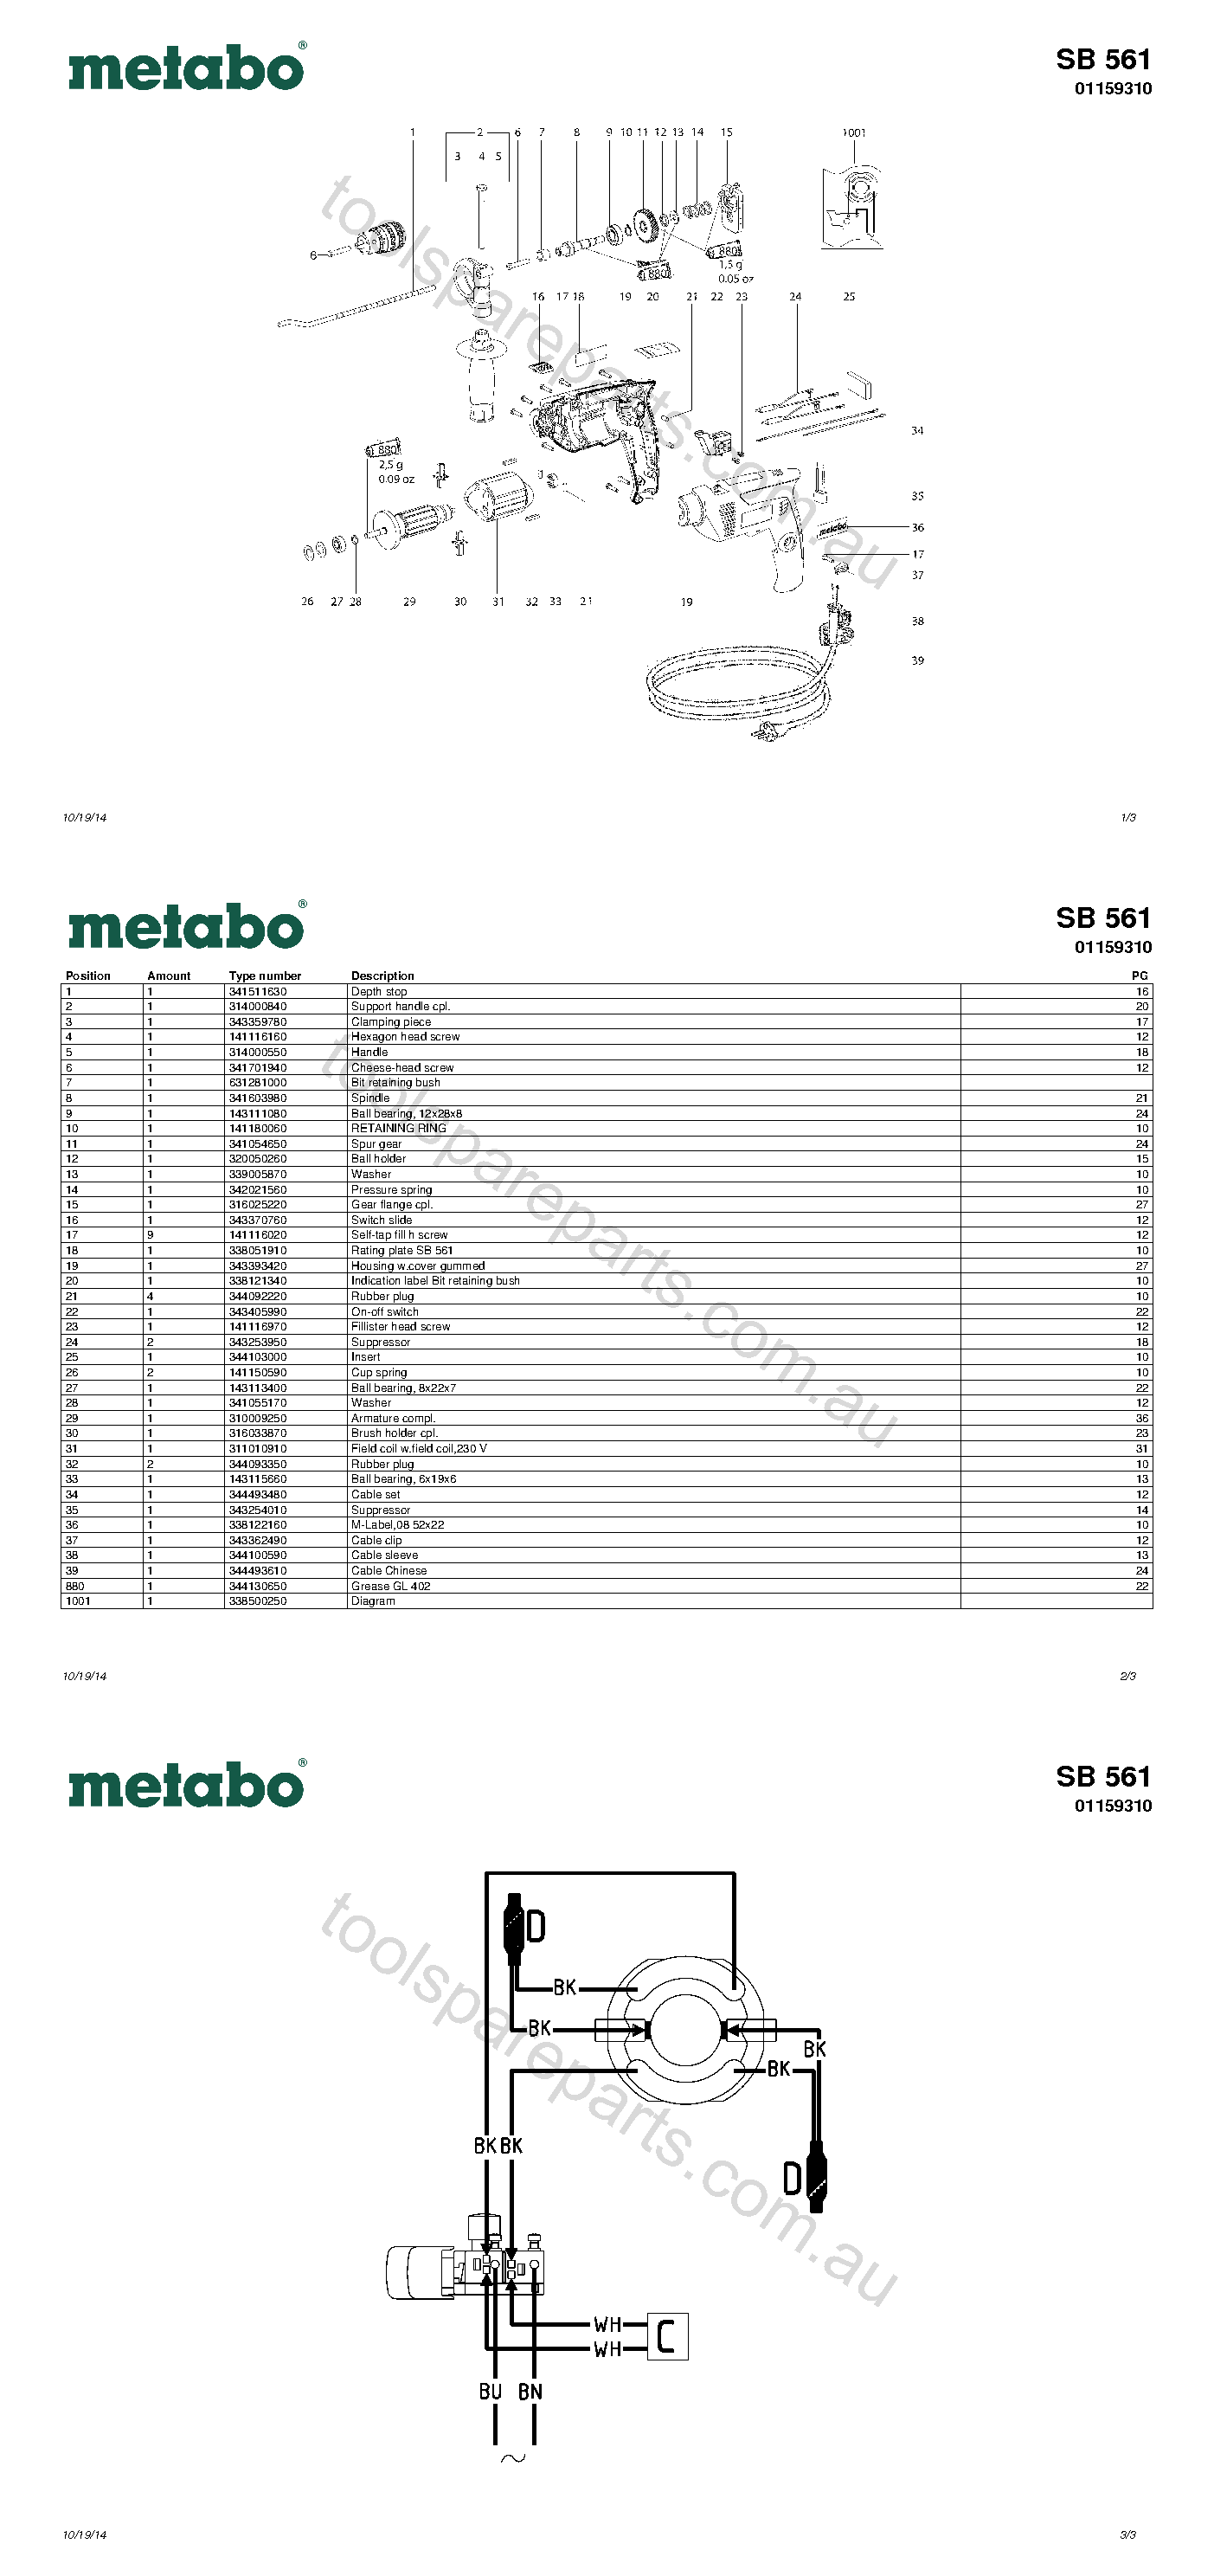 Metabo SB 561 01159310  Diagram 1